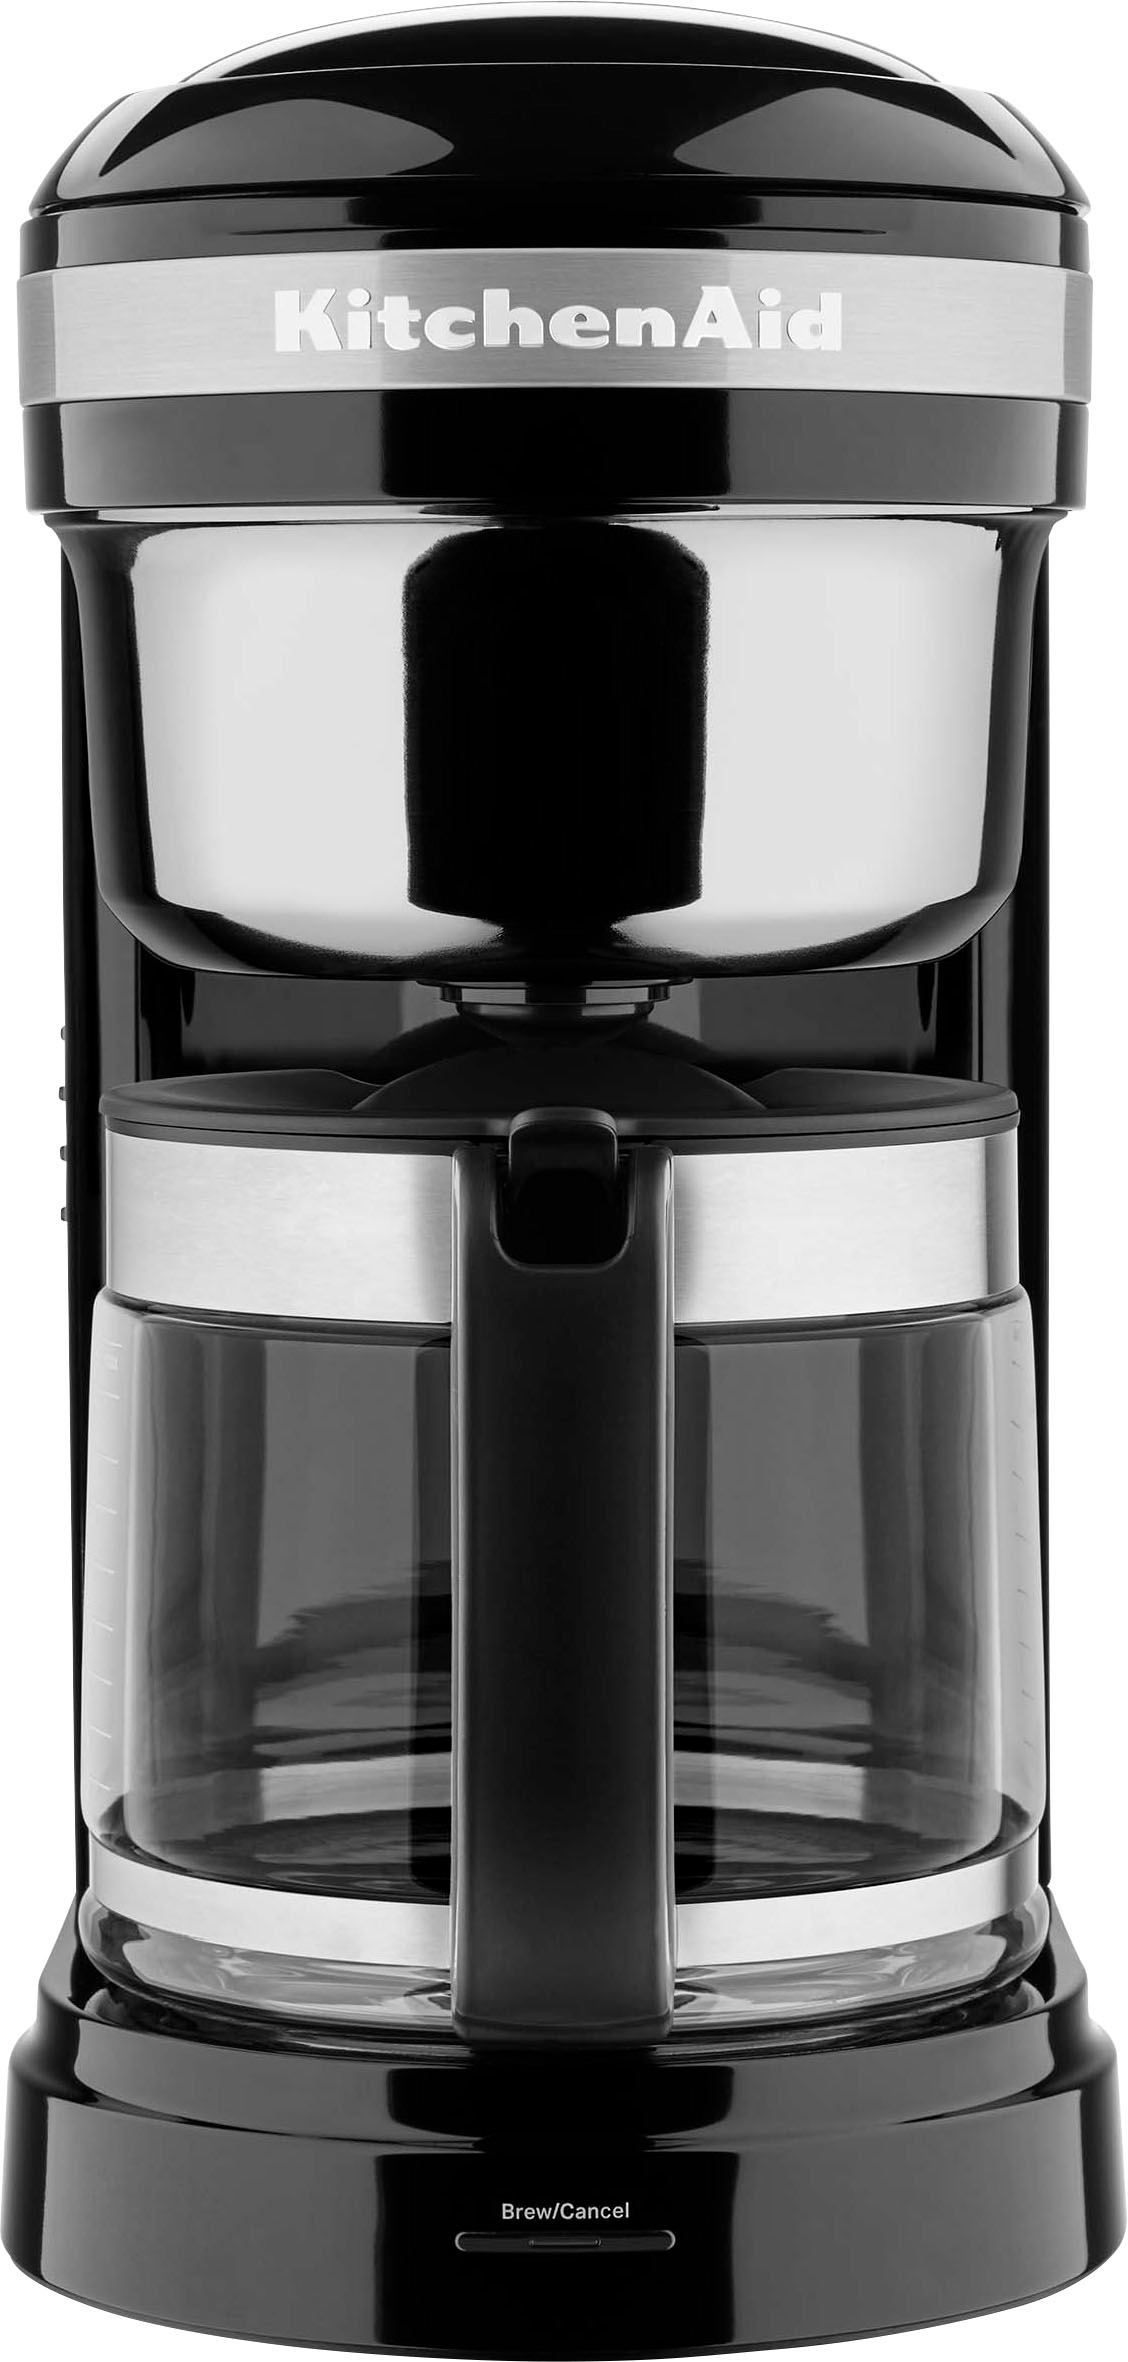 KitchenAid Coffee Maker, 12 Cup, Onyx Black